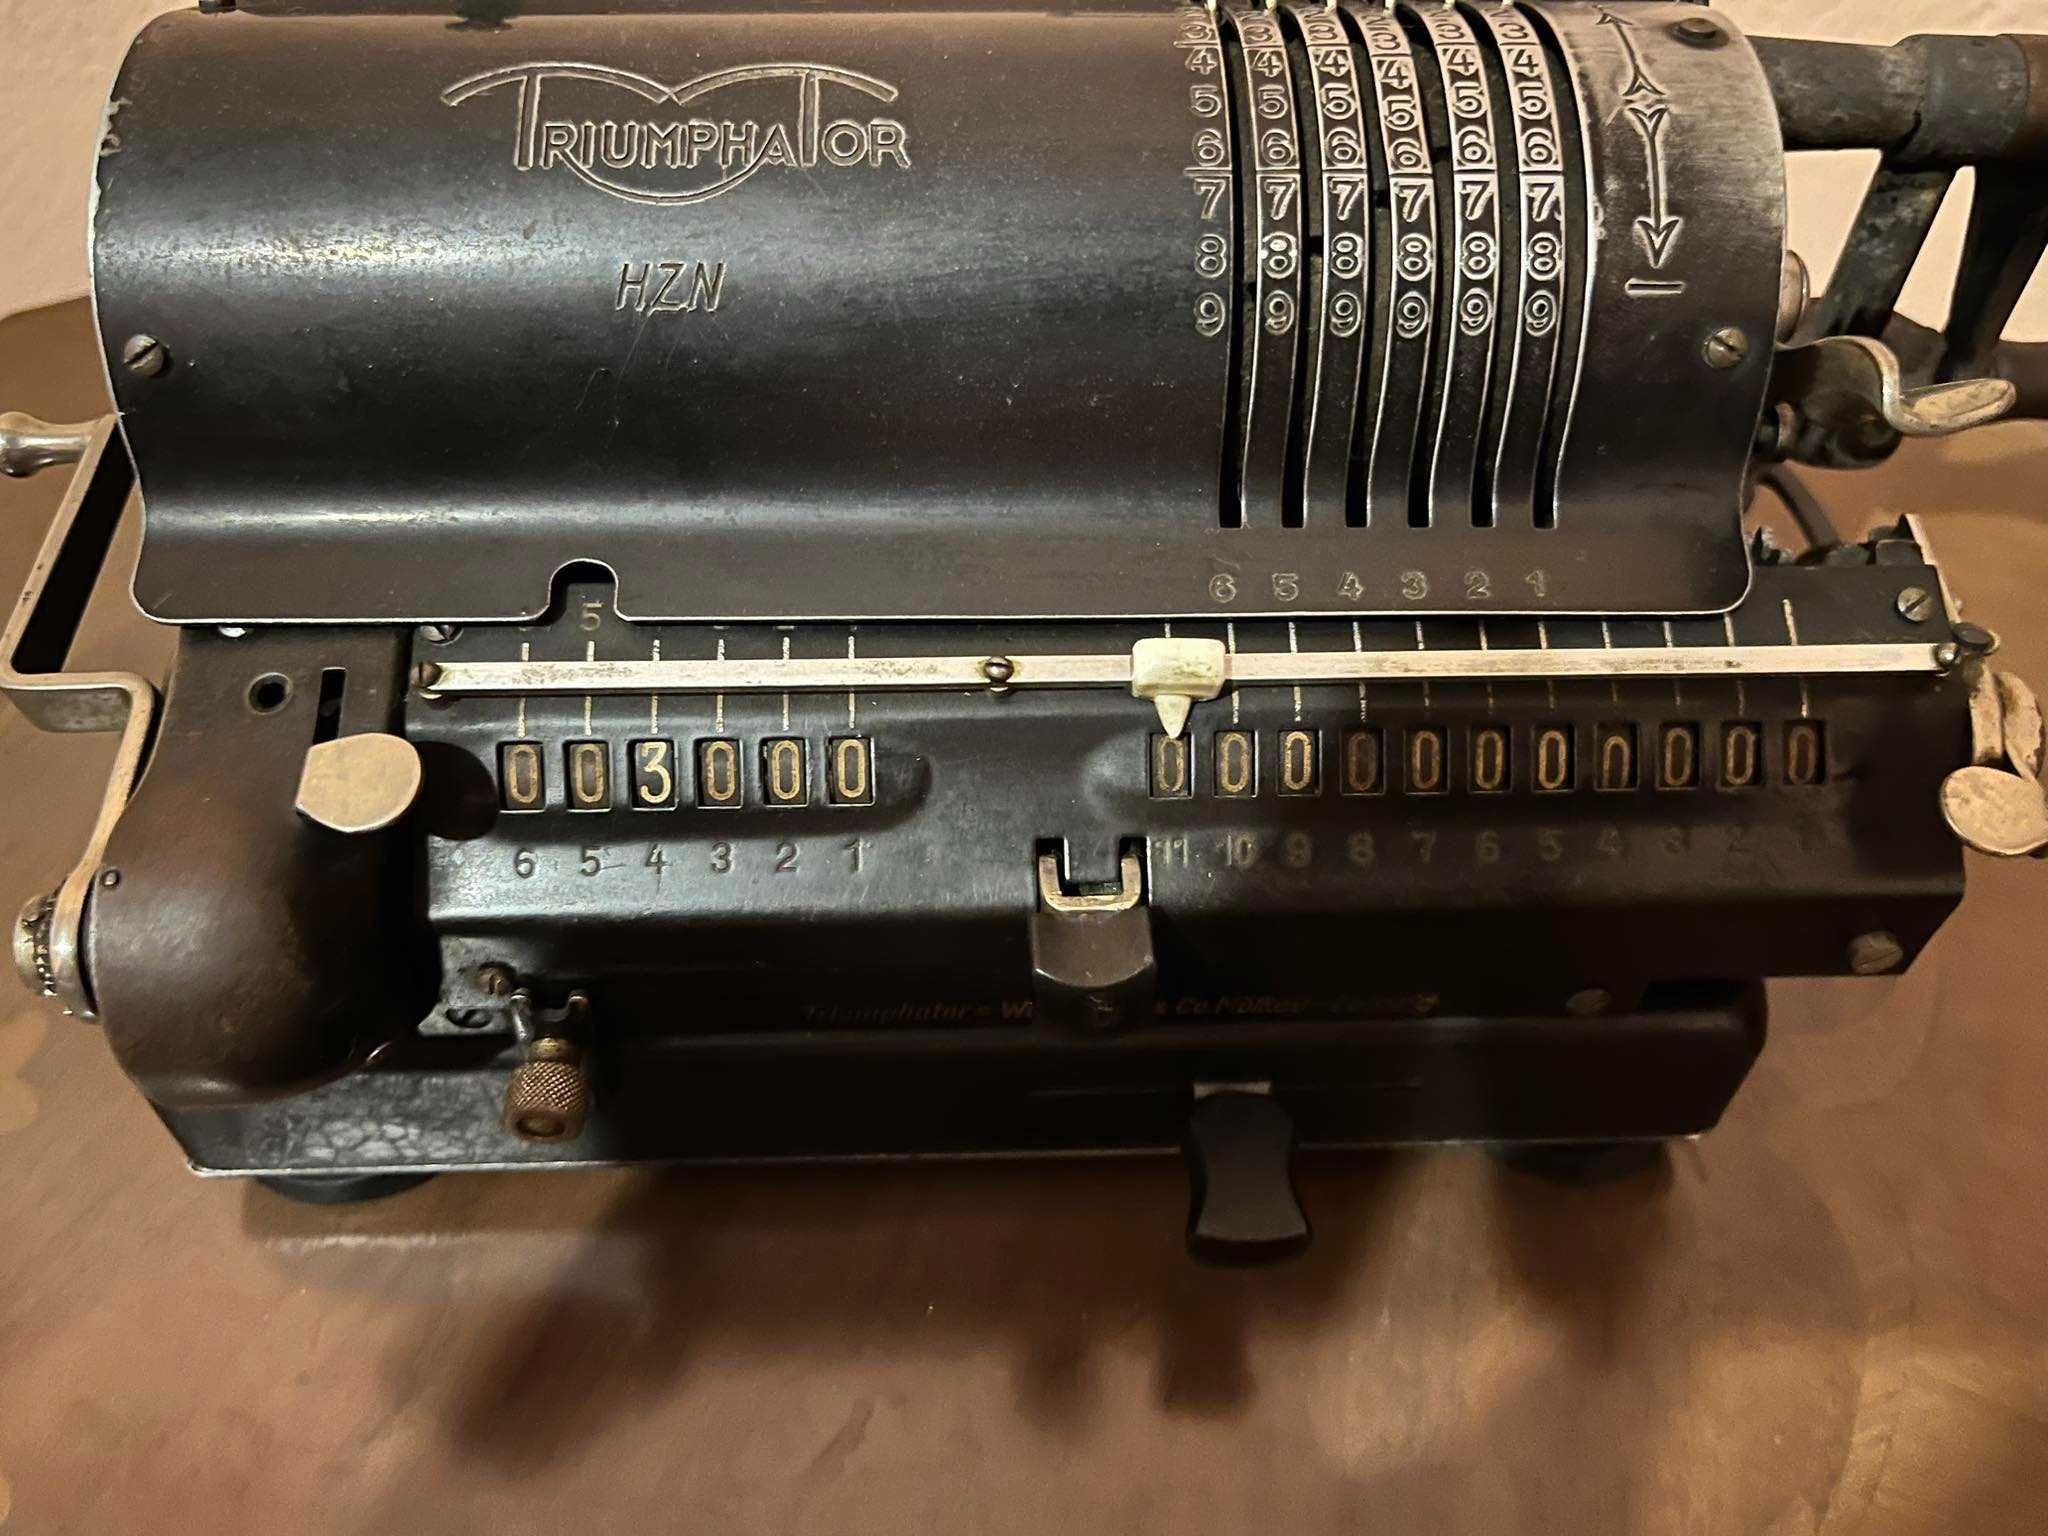 Немска сметачна машина Триумфатор 1920г-1940г / TRIUMPHATOR Werk